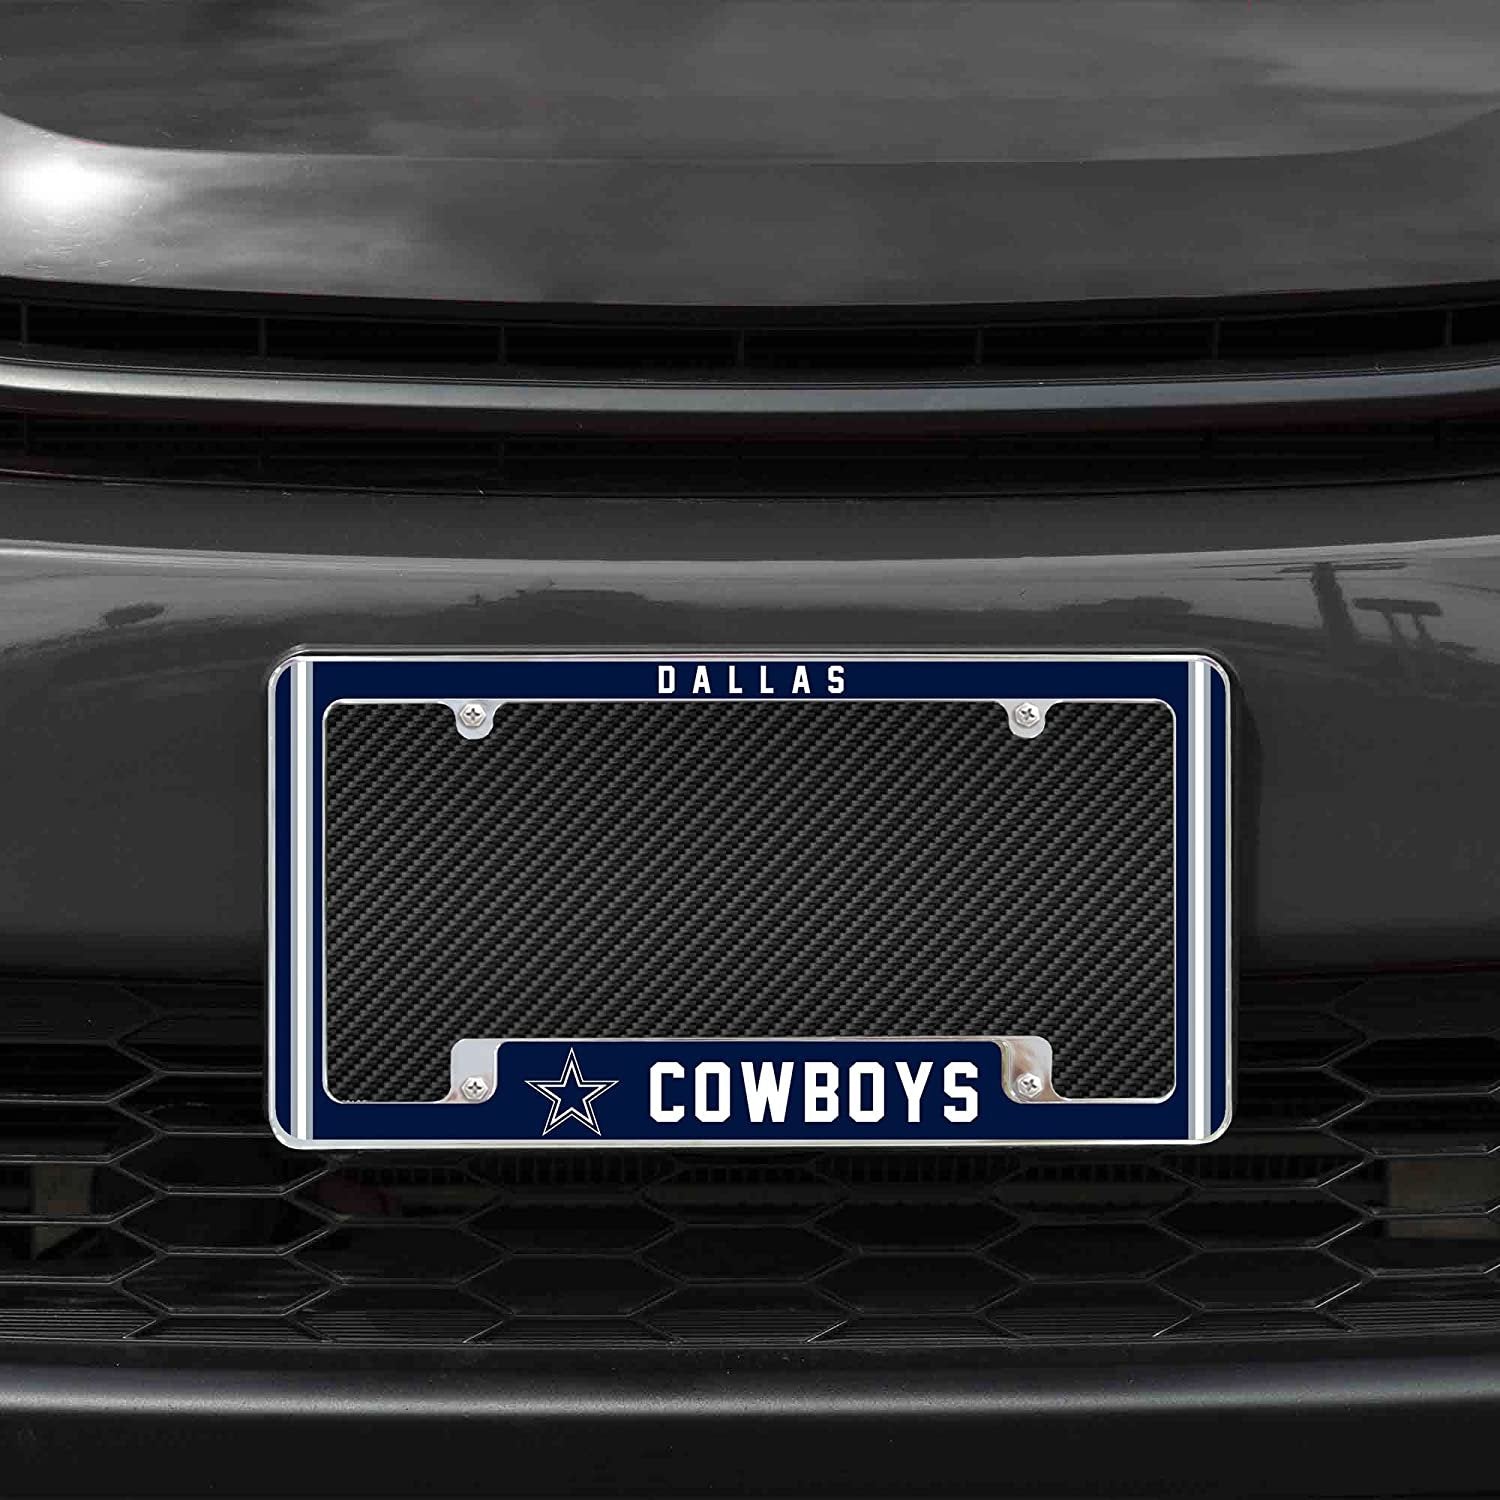 Dallas Cowboys Metal License Plate Frame Chrome Tag Cover Alternate Design 6x12 Inch